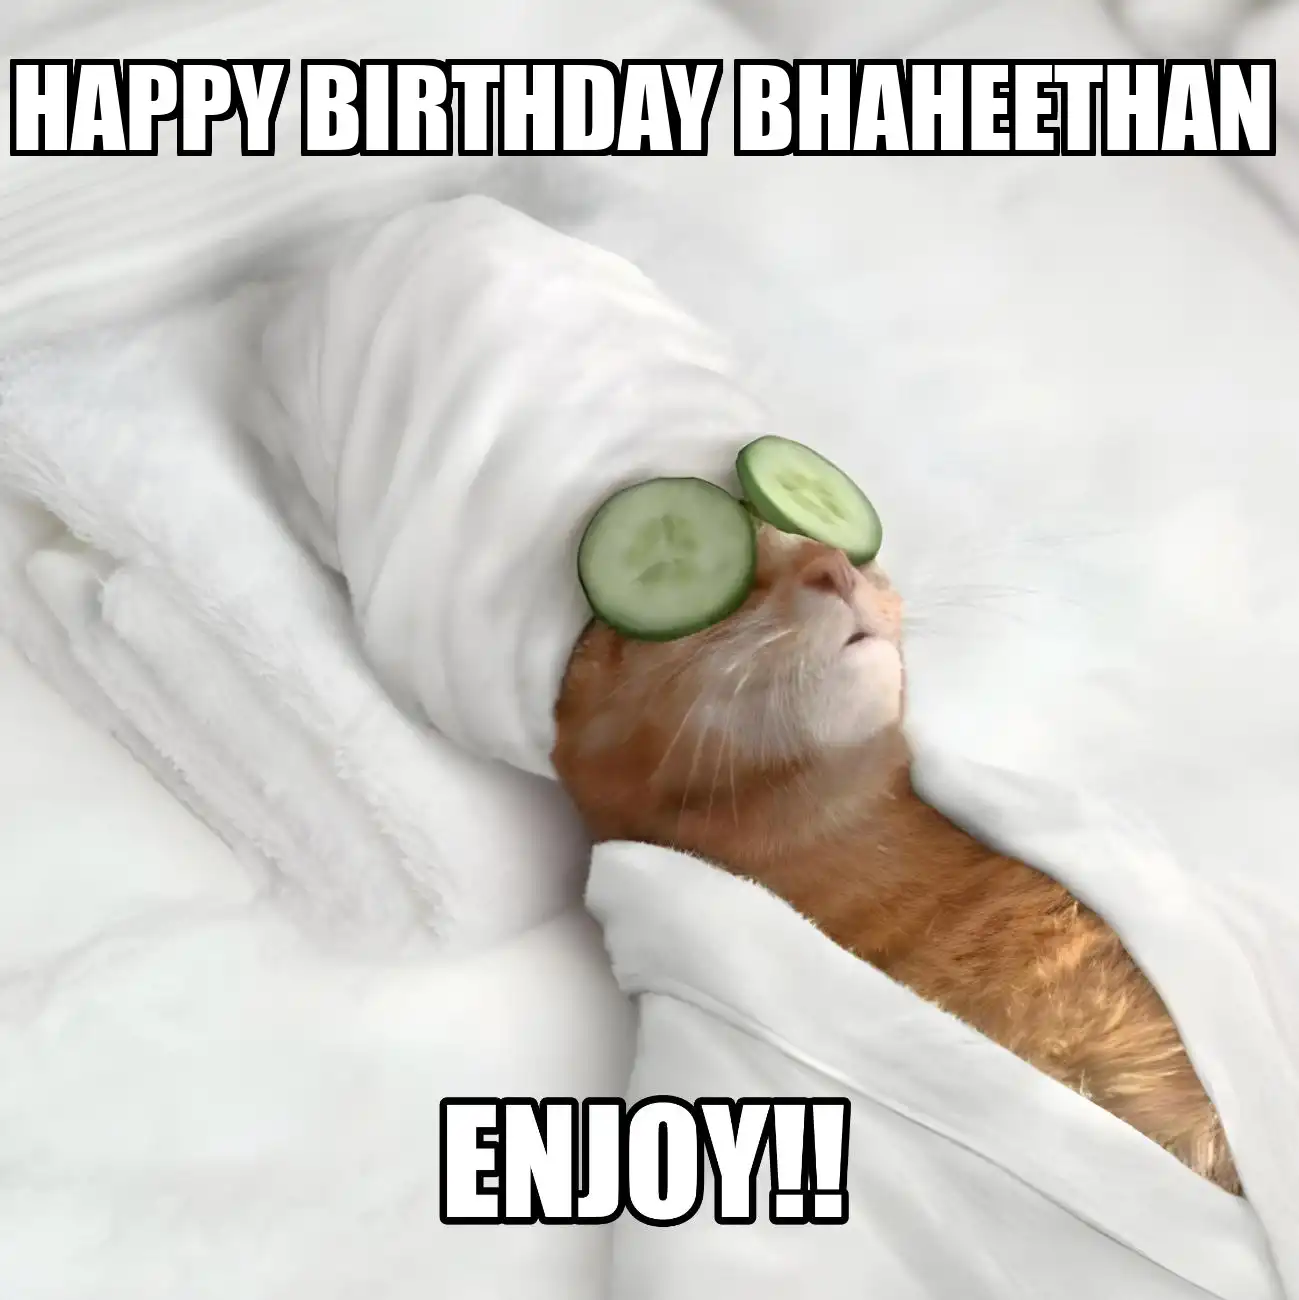 Happy Birthday Bhaheethan Enjoy Cat Meme